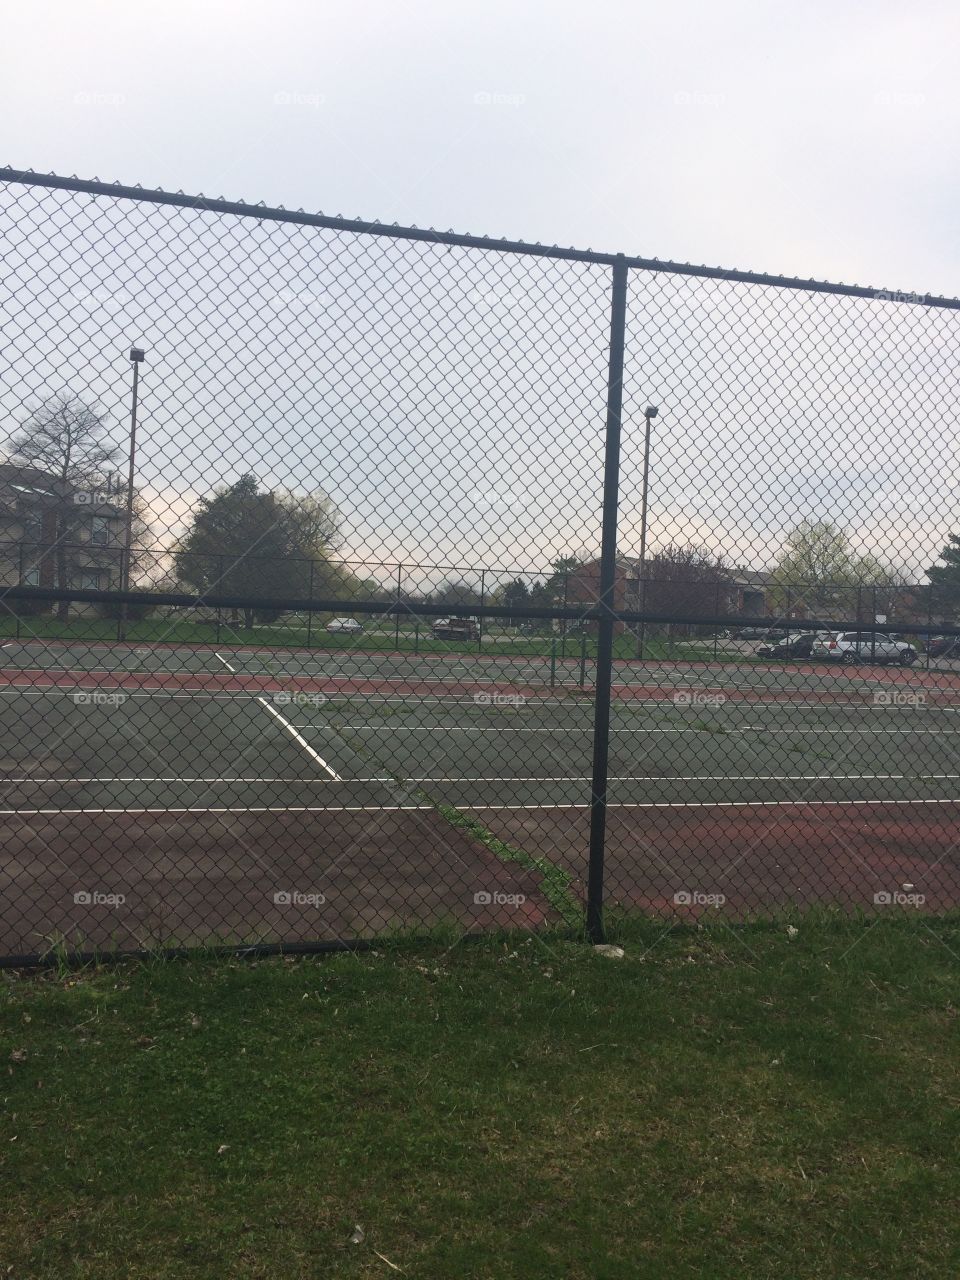 Broken down old tennis court 🎾 